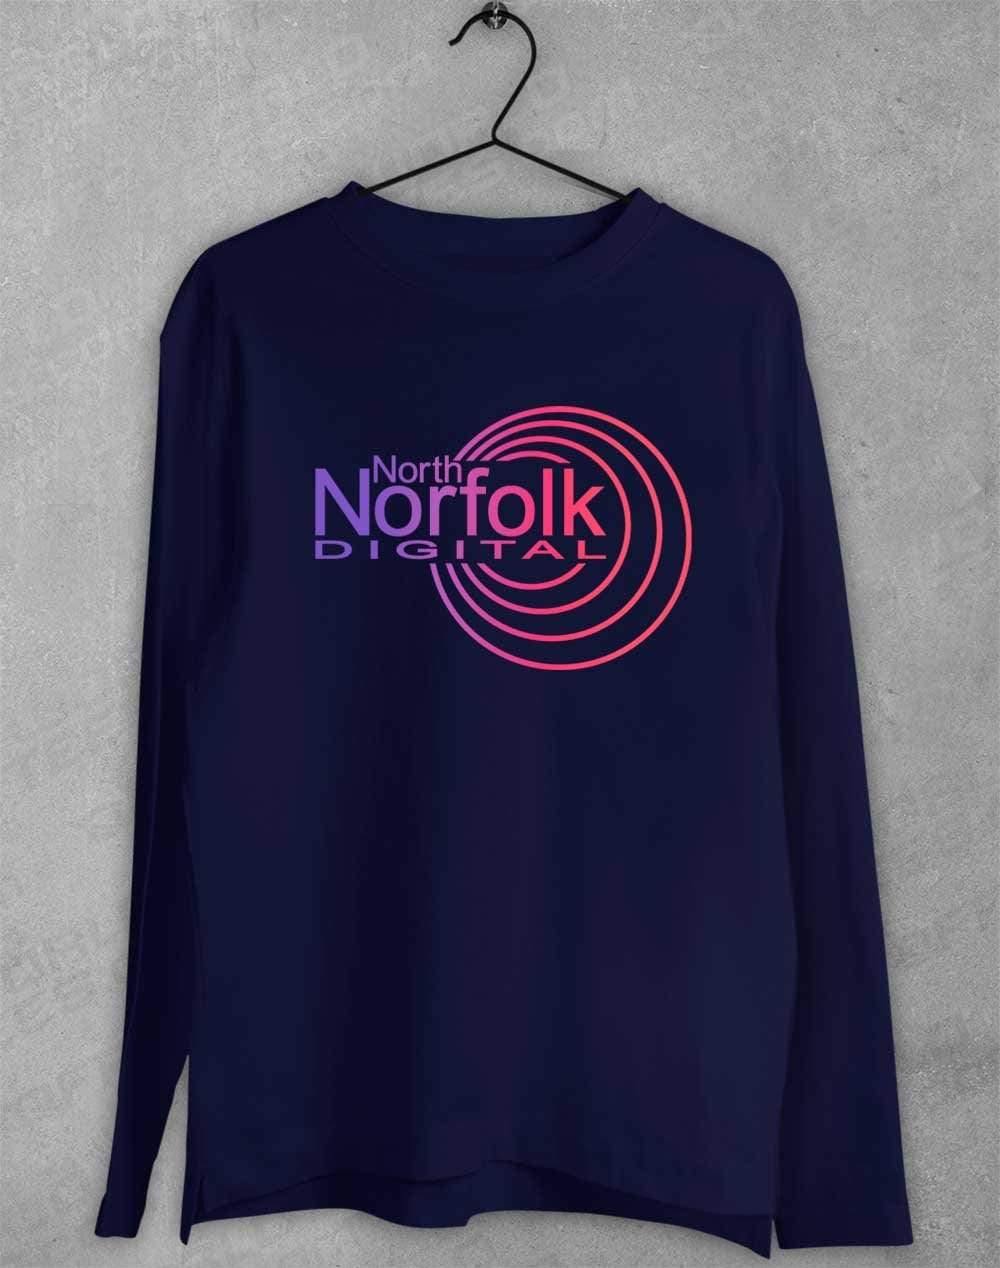 North Norfolk Digital Long Sleeve T-Shirt S / Navy  - Off World Tees